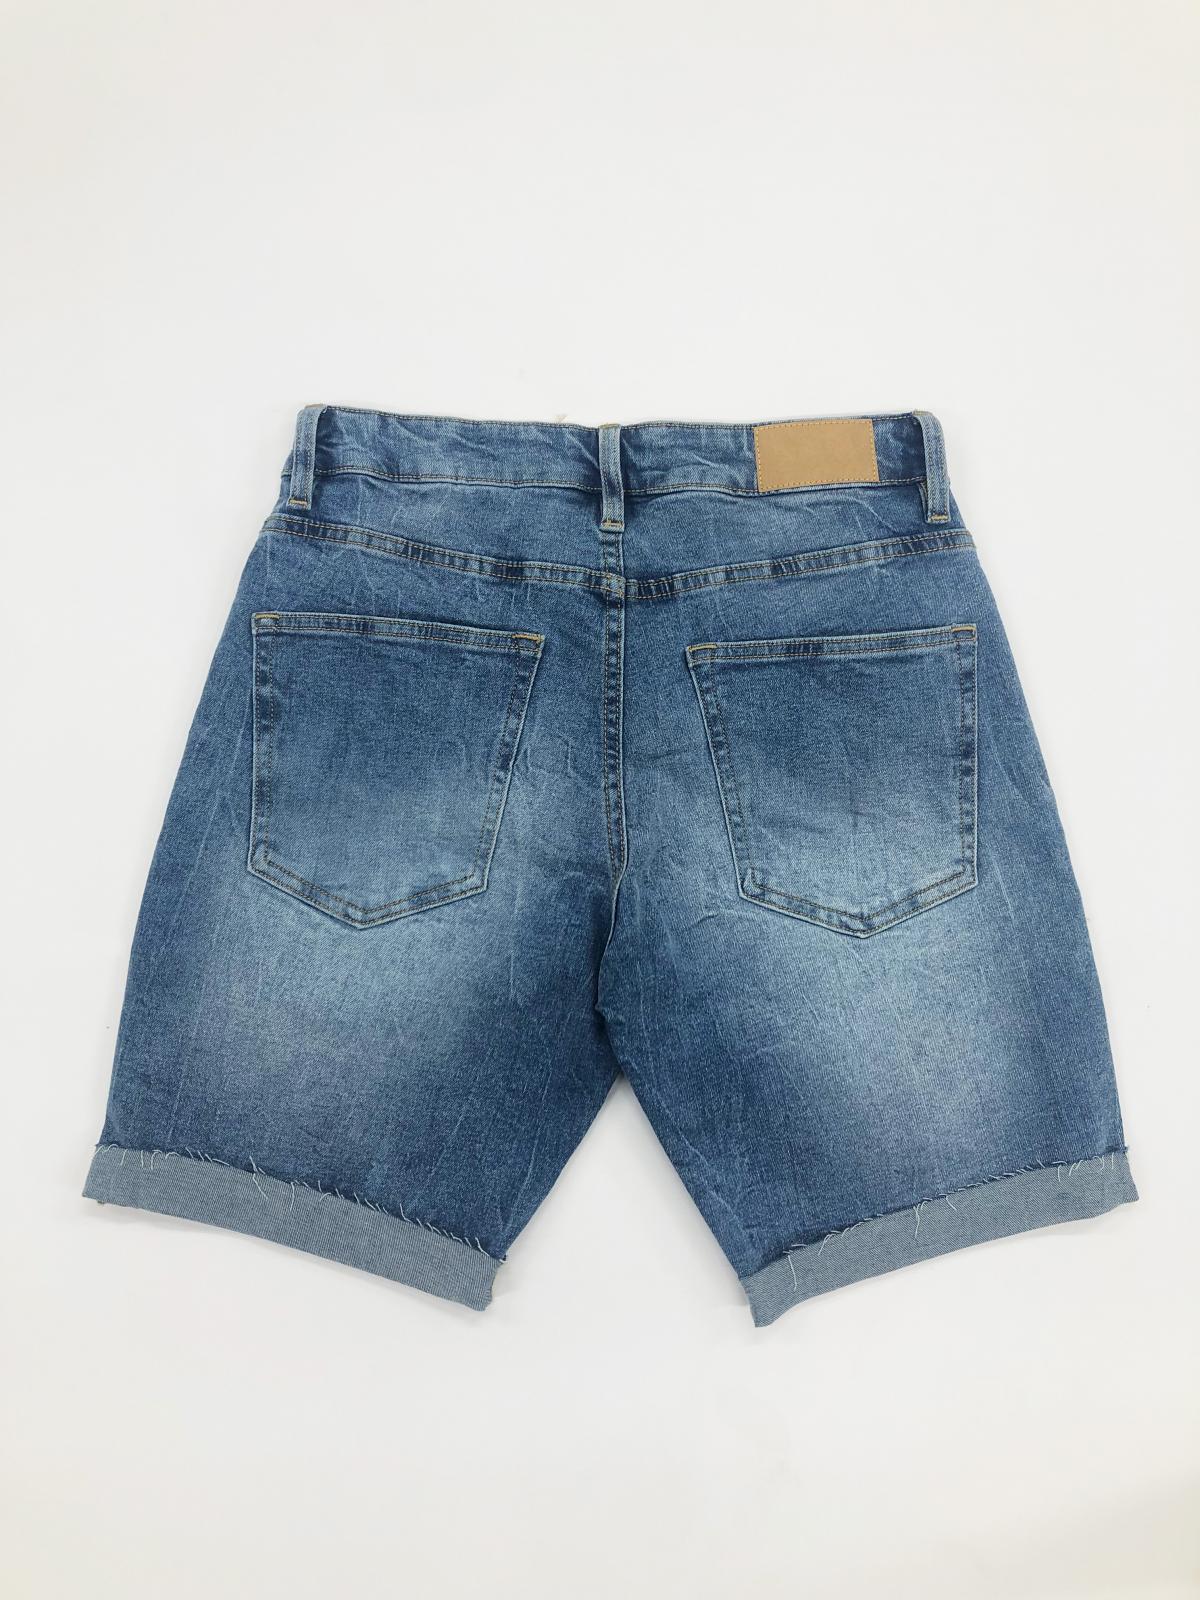 Men's Jeans Shorts SS0003 #1